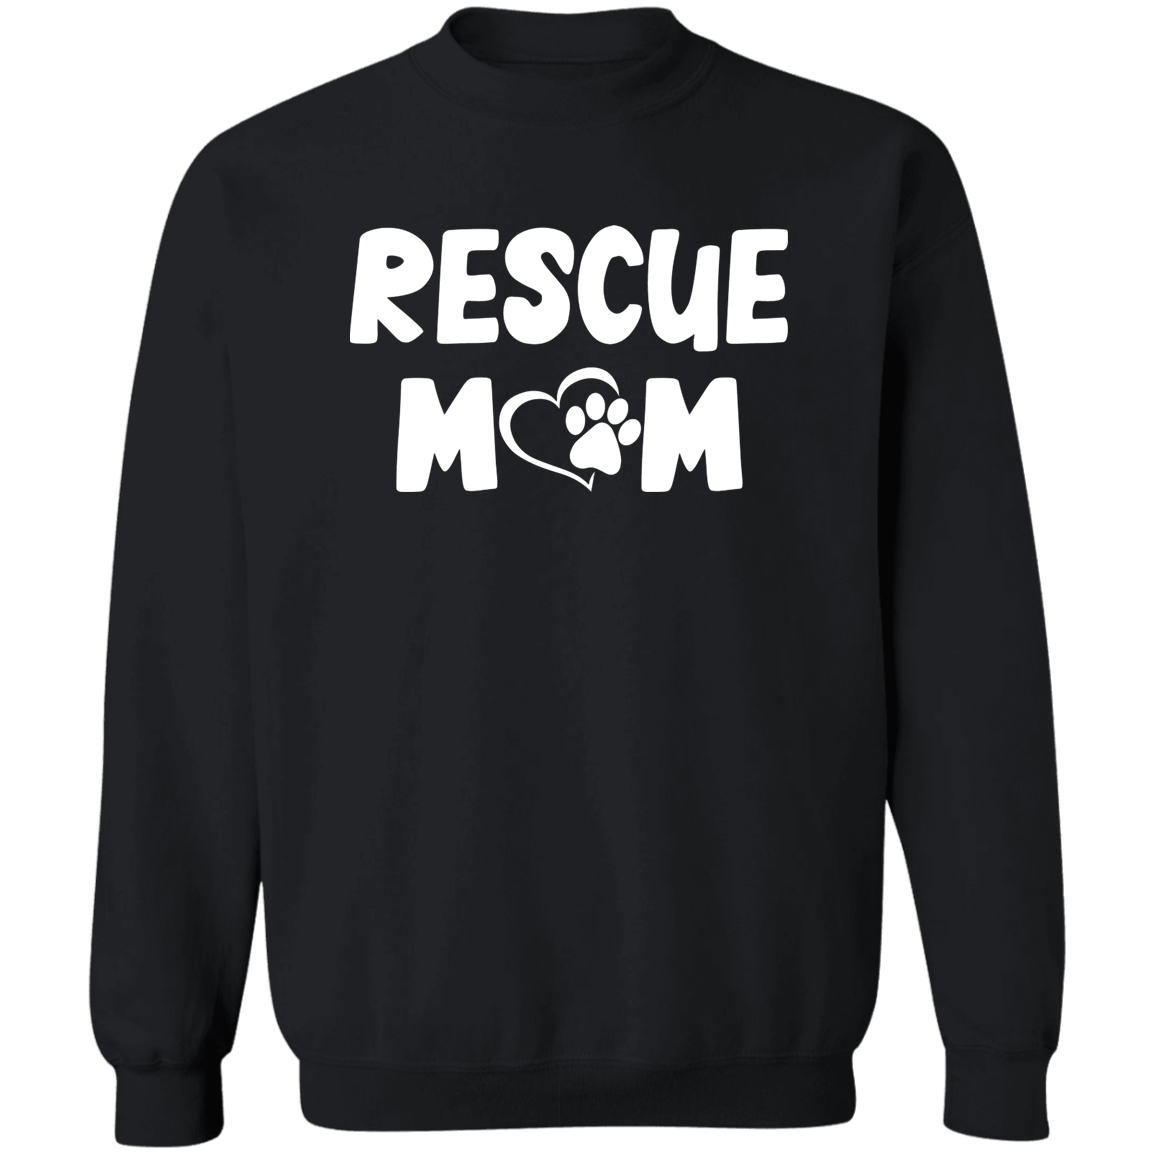 Rescue Mom - Sweatshirt.